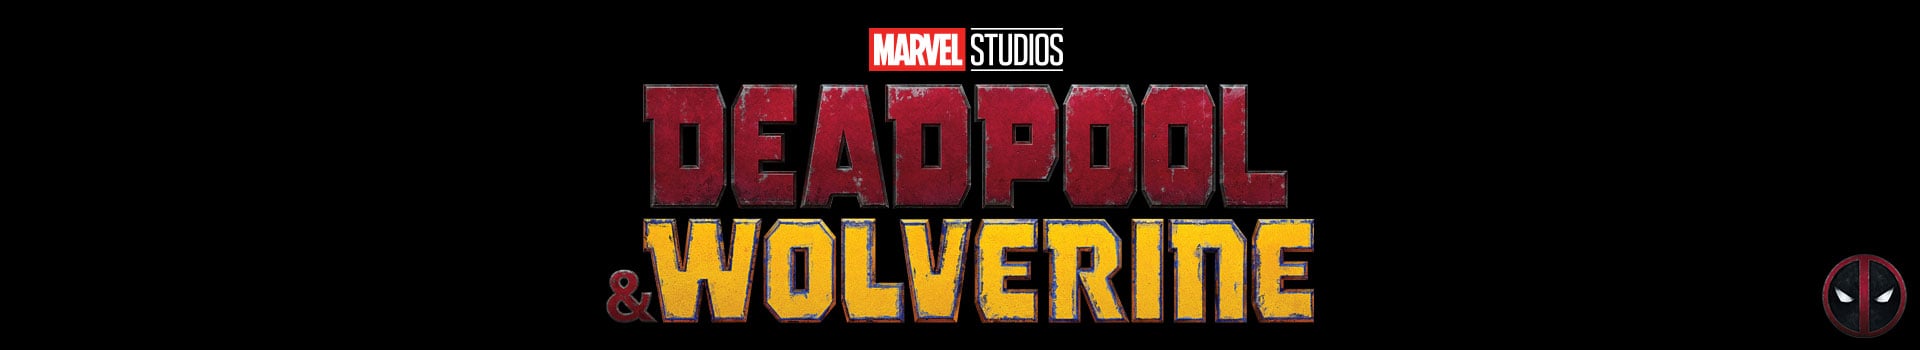 Deadpool top banner